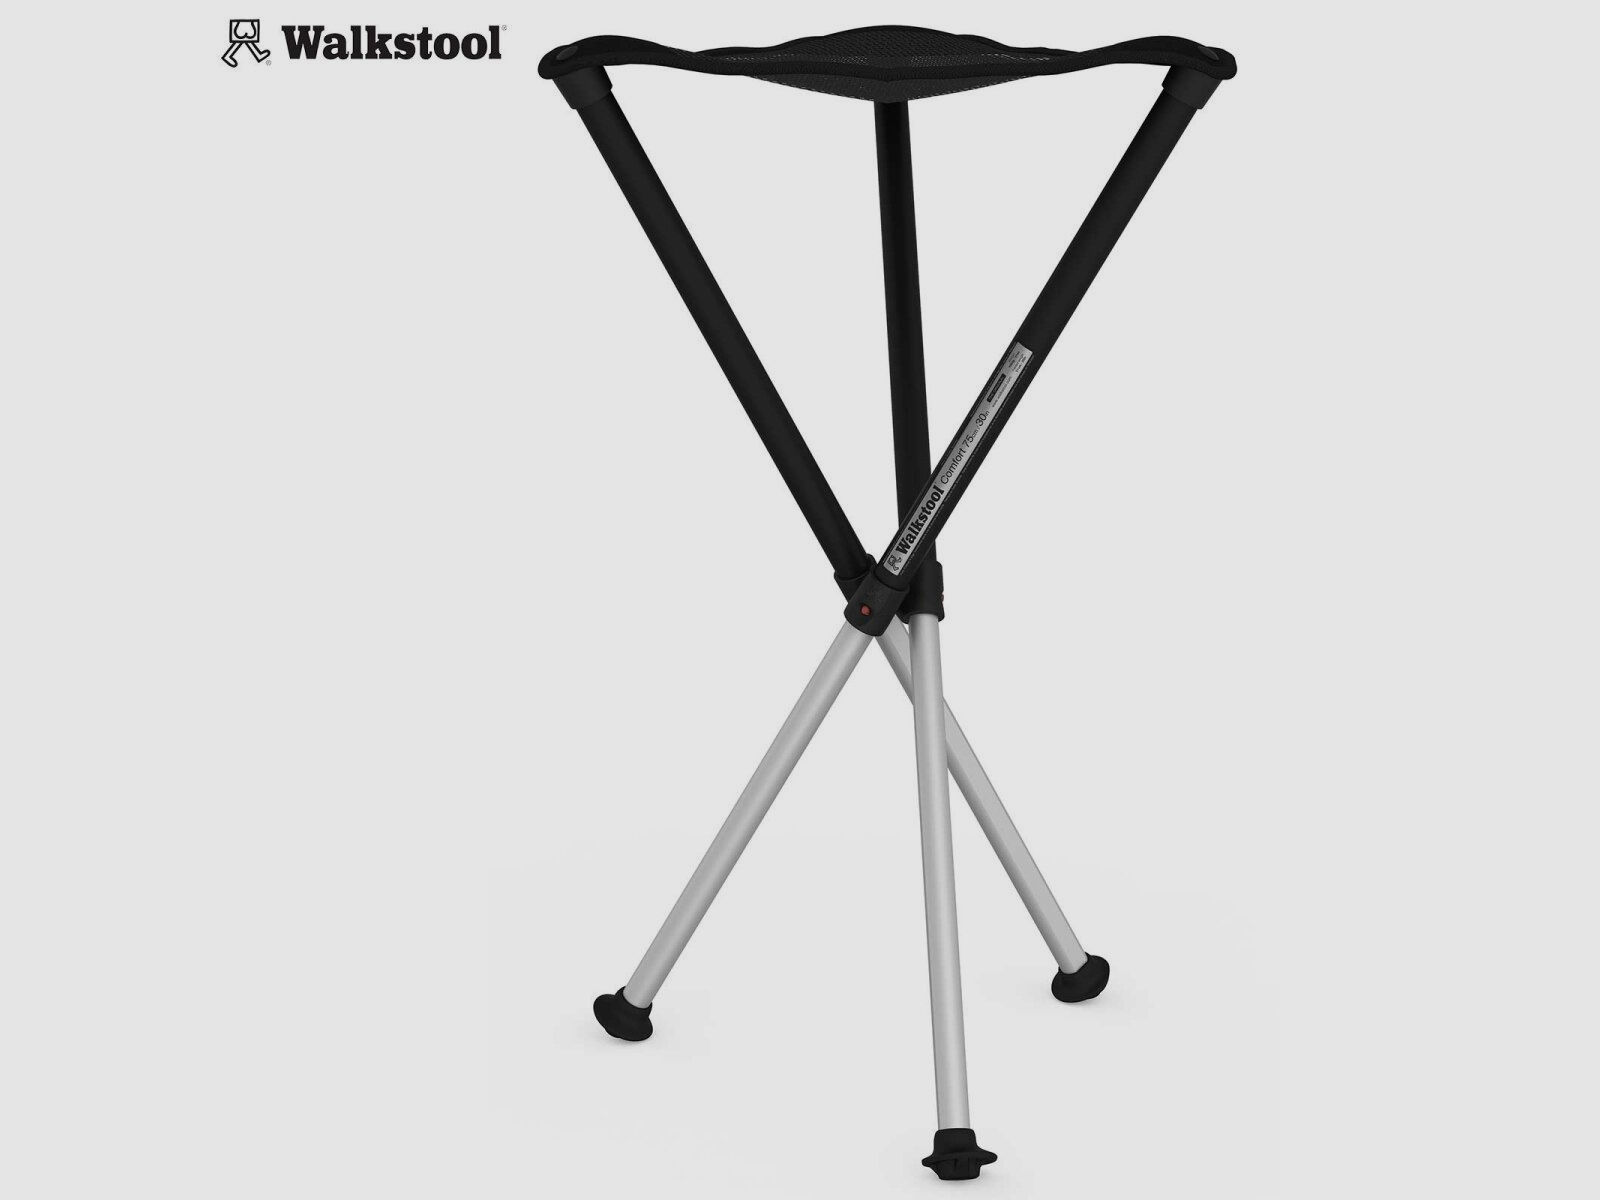 Walkstool Dreibeinsitz Comfort normale Sitzhöhe: 75cm